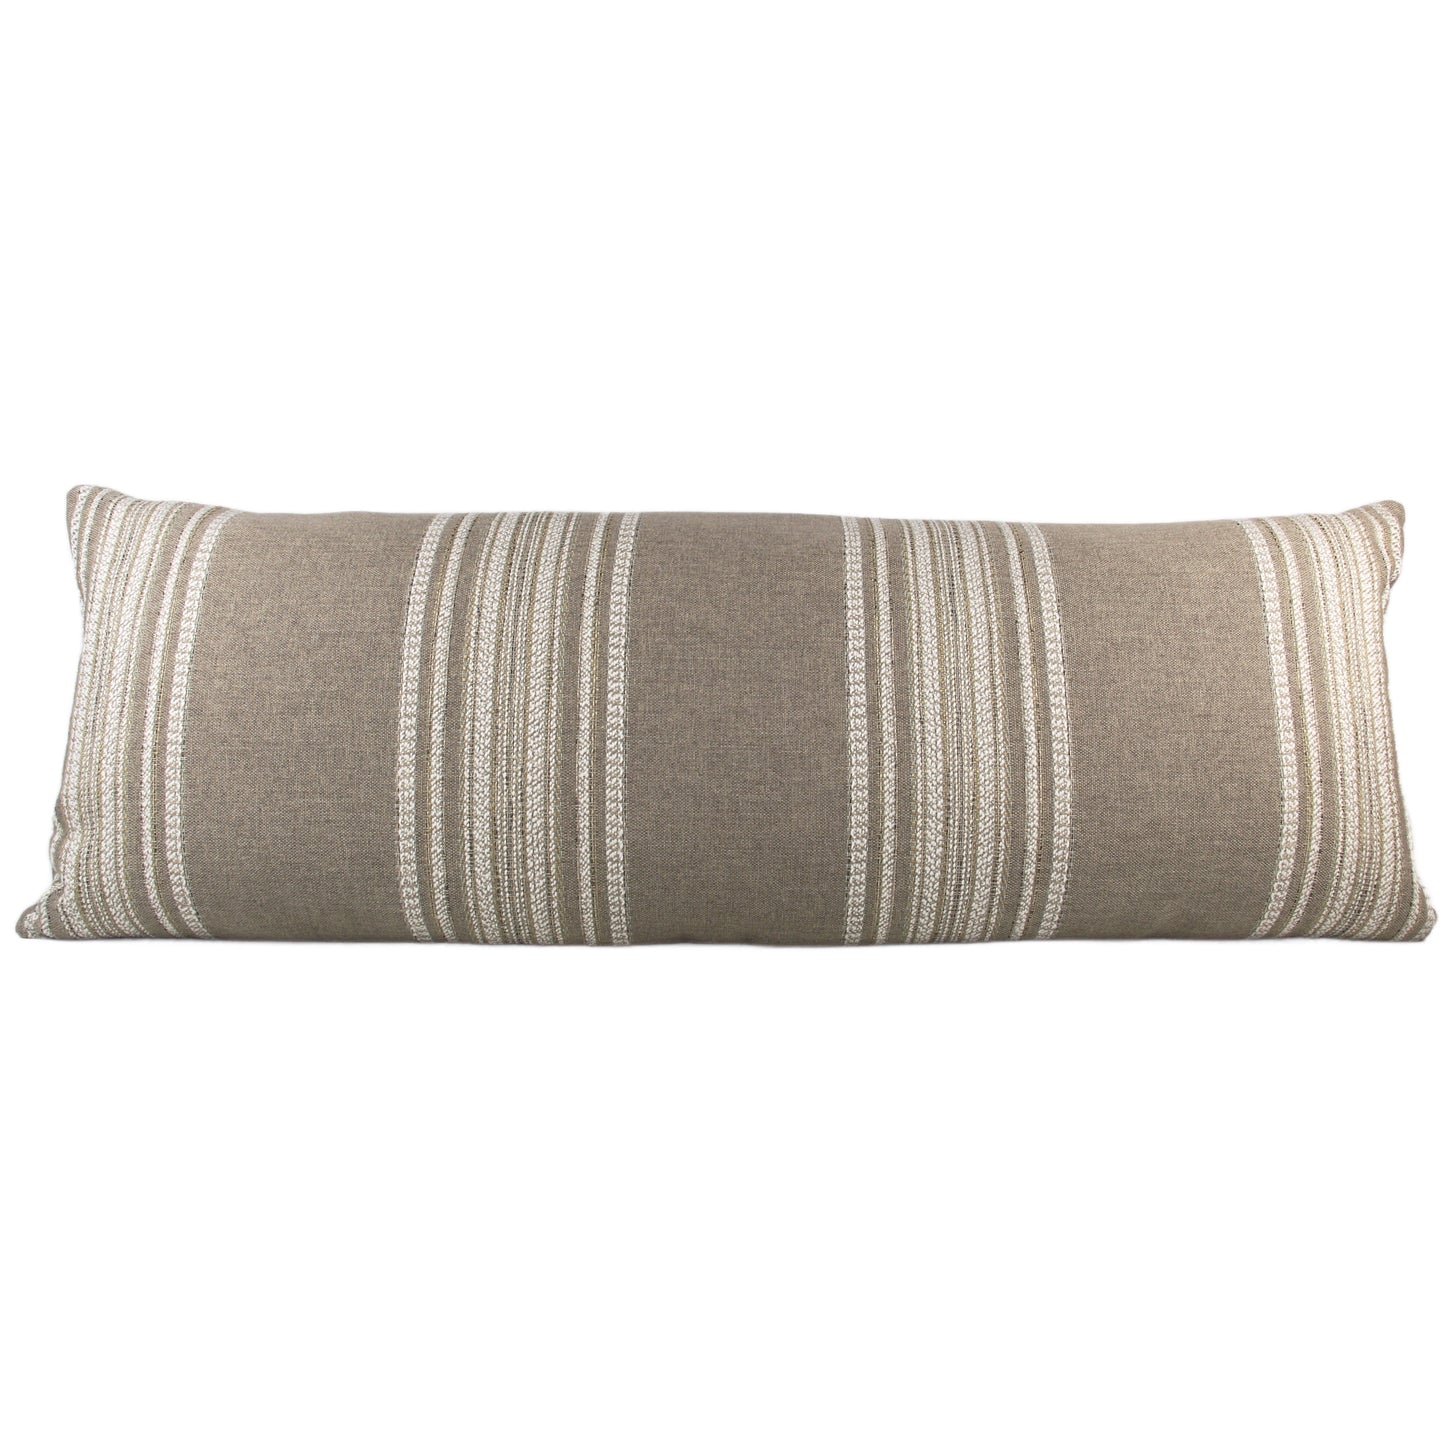 Beige Multi-Stripe Long Lumbar Pillow Cover, 14x36"